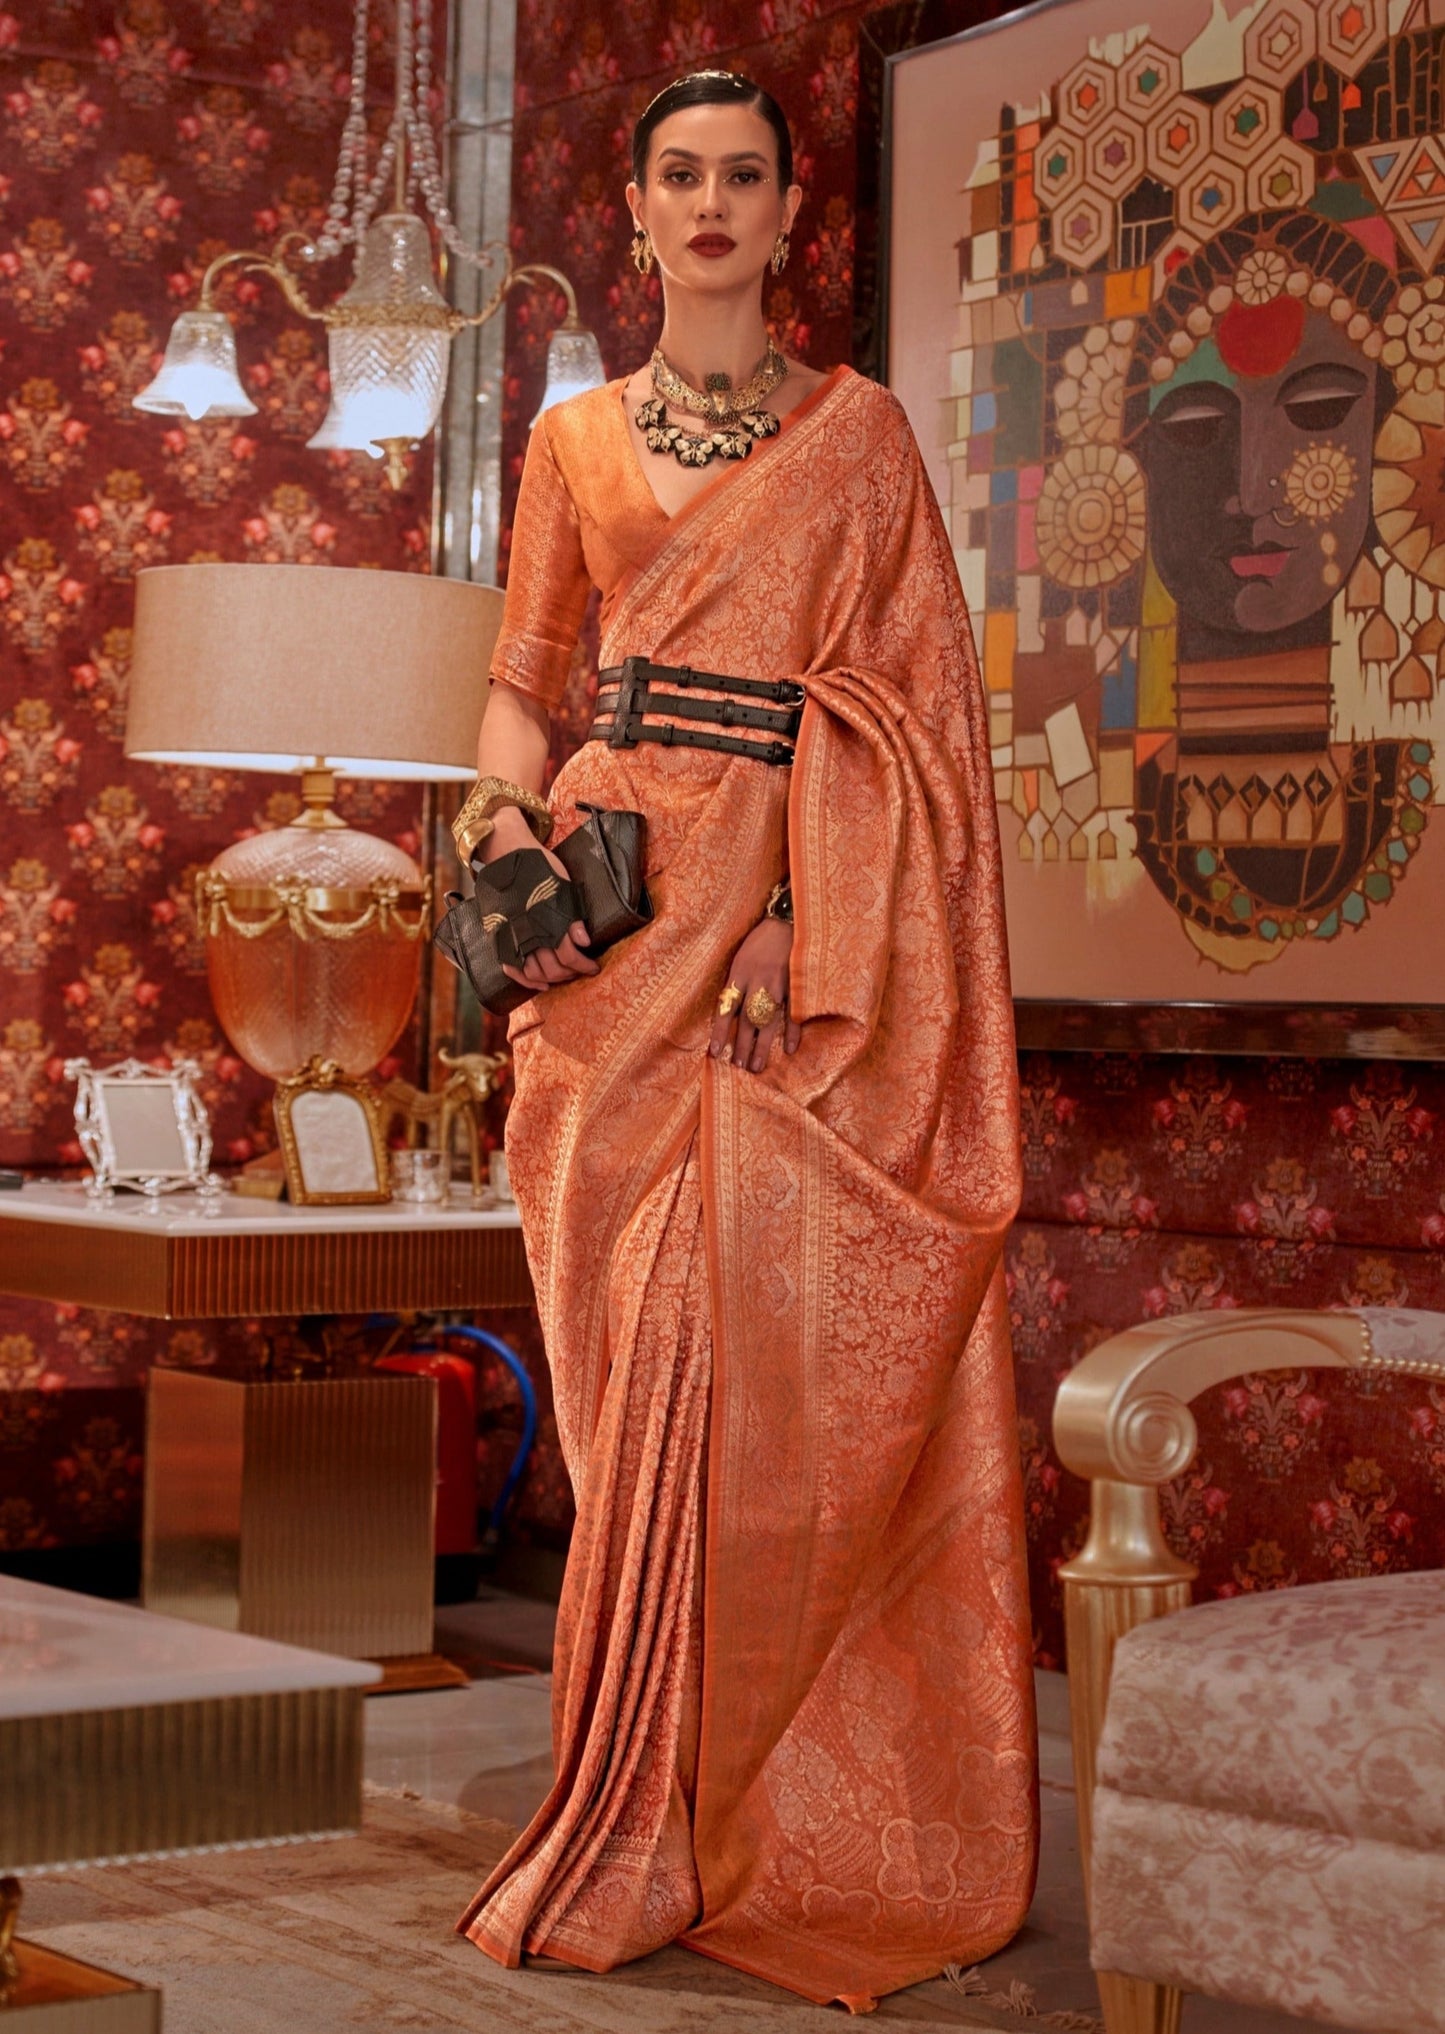 Banarasi silk yellow orange handloom bridal saree online shopping for wedding.